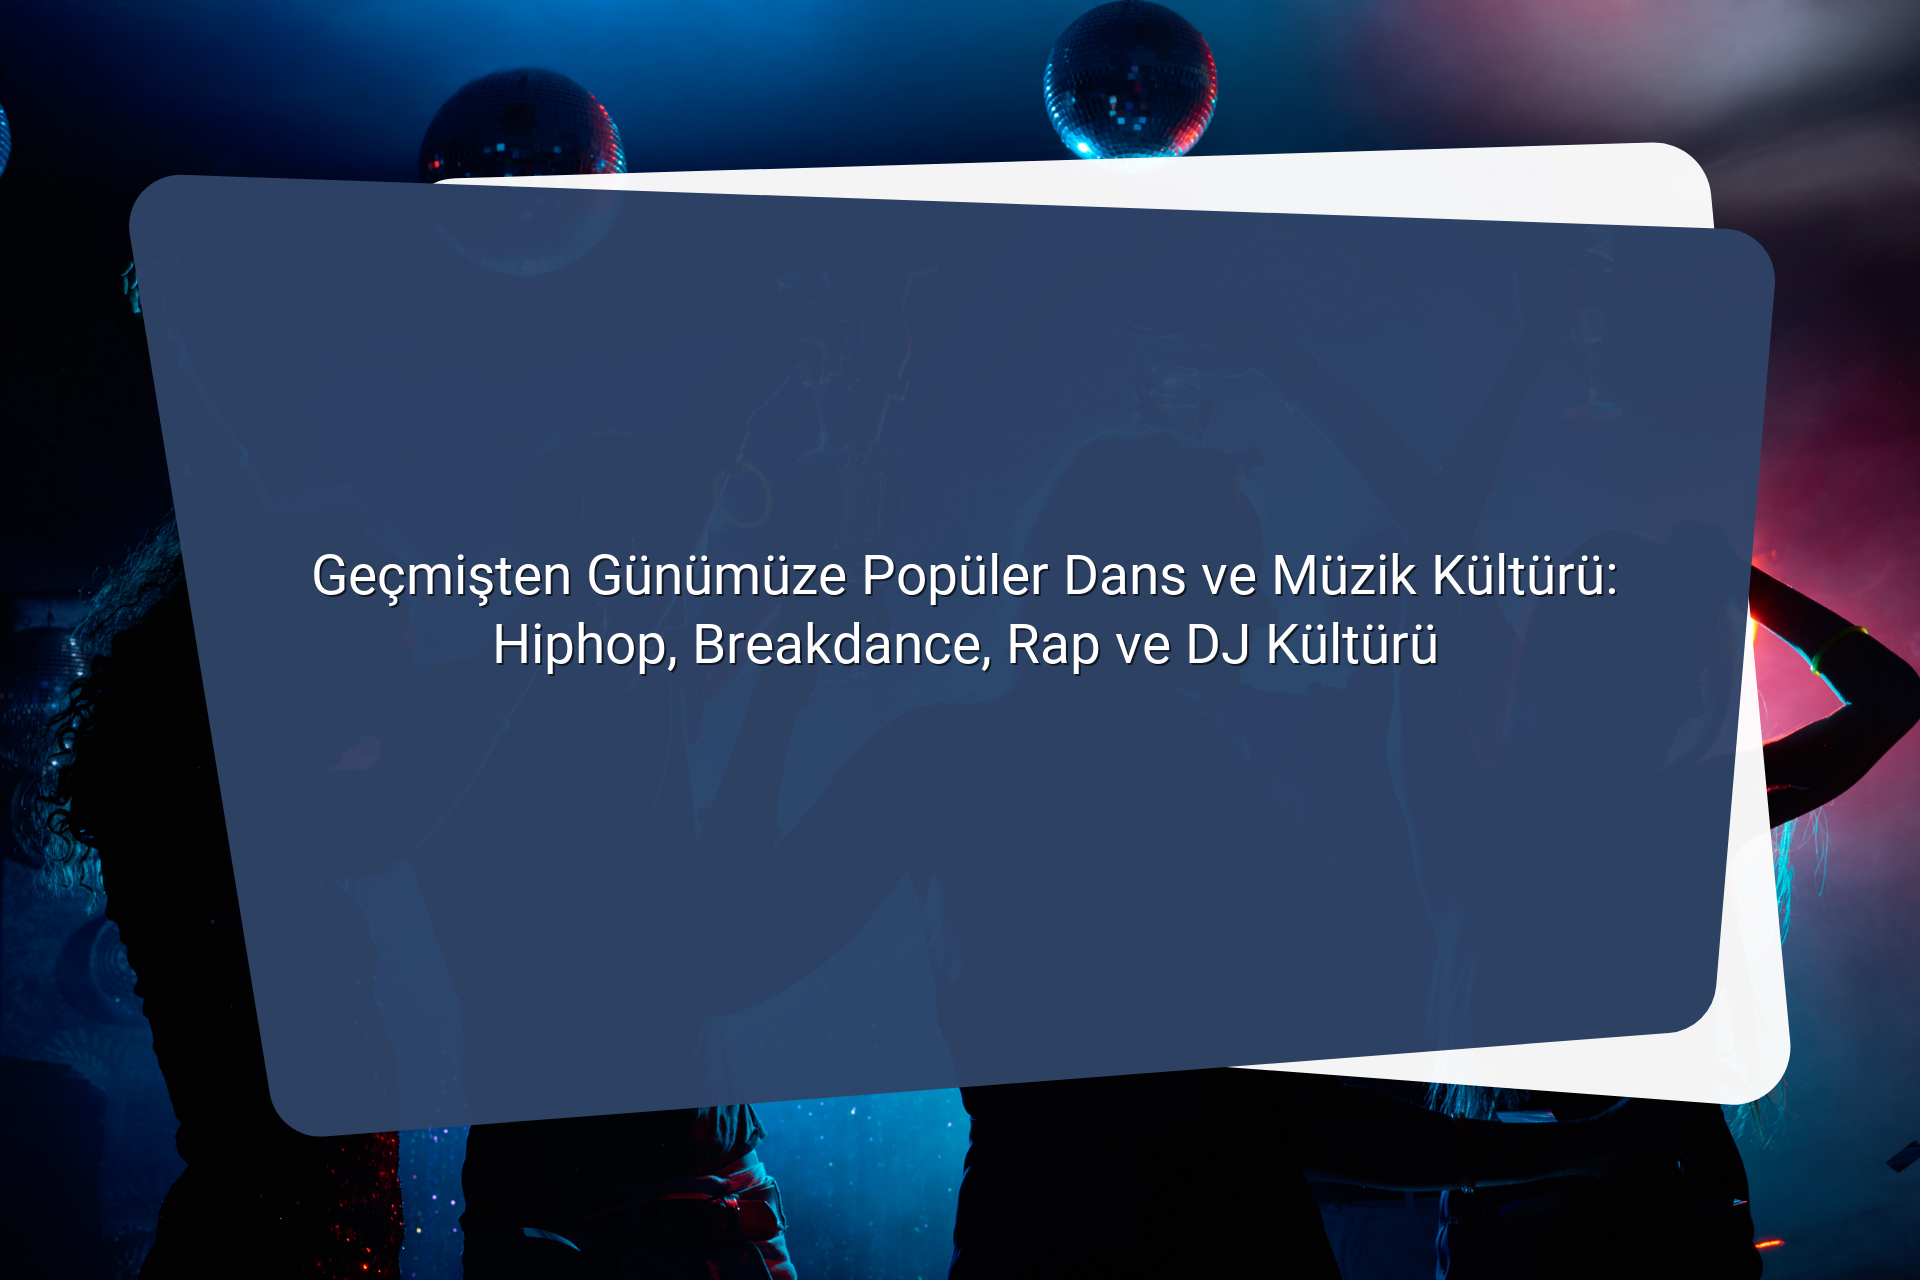 Gecmisten Gunumuze Populer Dans ve Muzik Kulturu Hiphop Breakdance Rap ve DJ Kulturu